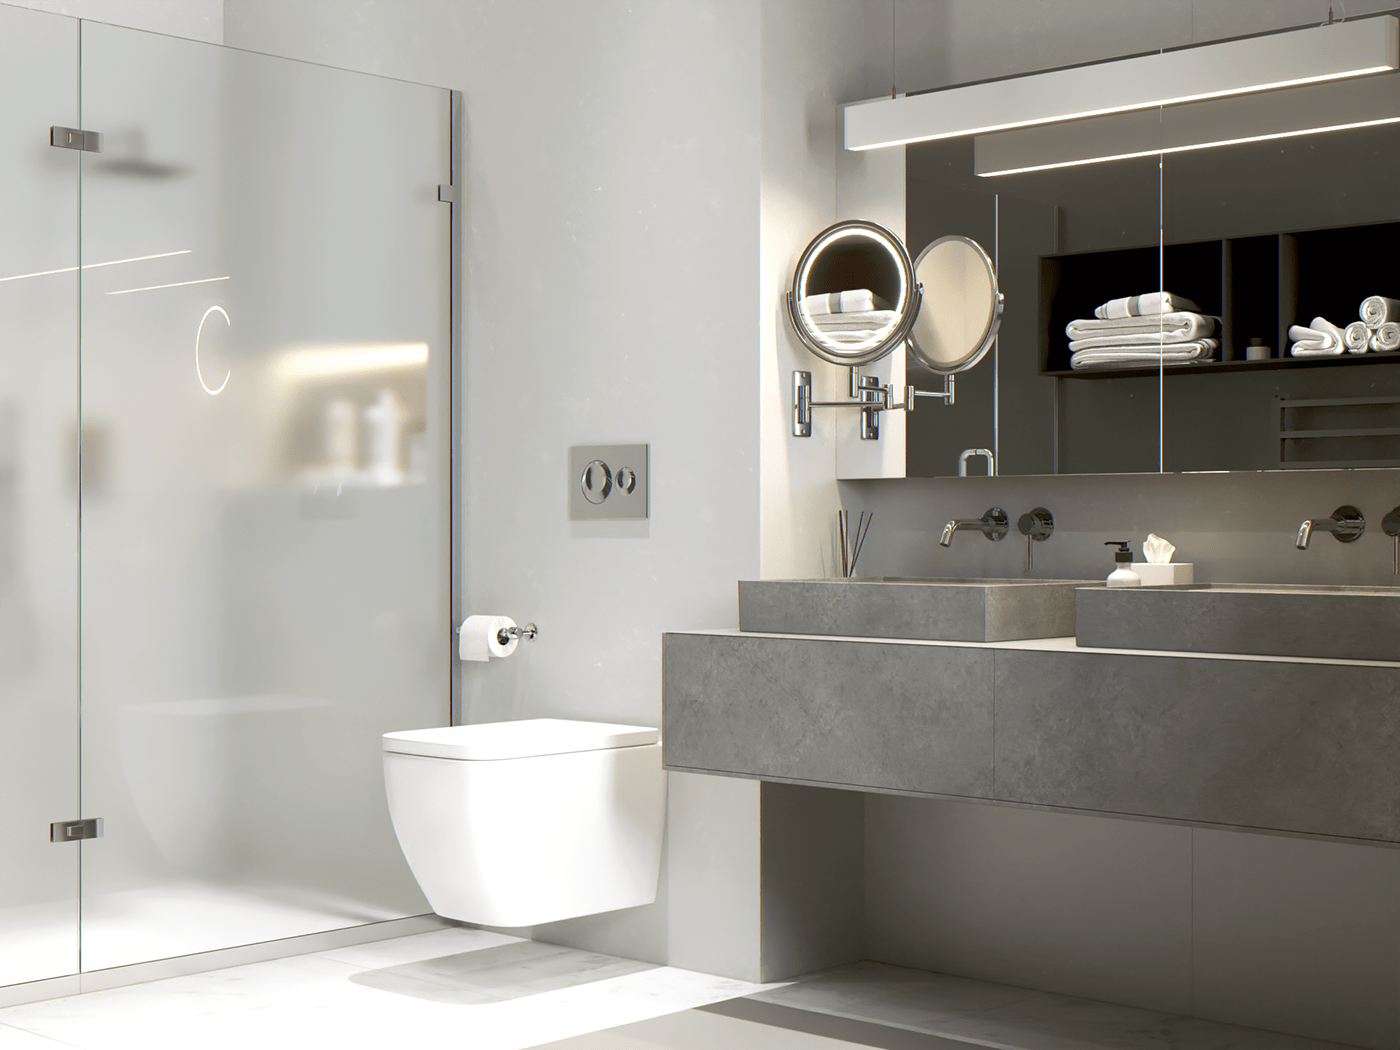 3DDesign bathroom design Interior toilet wc